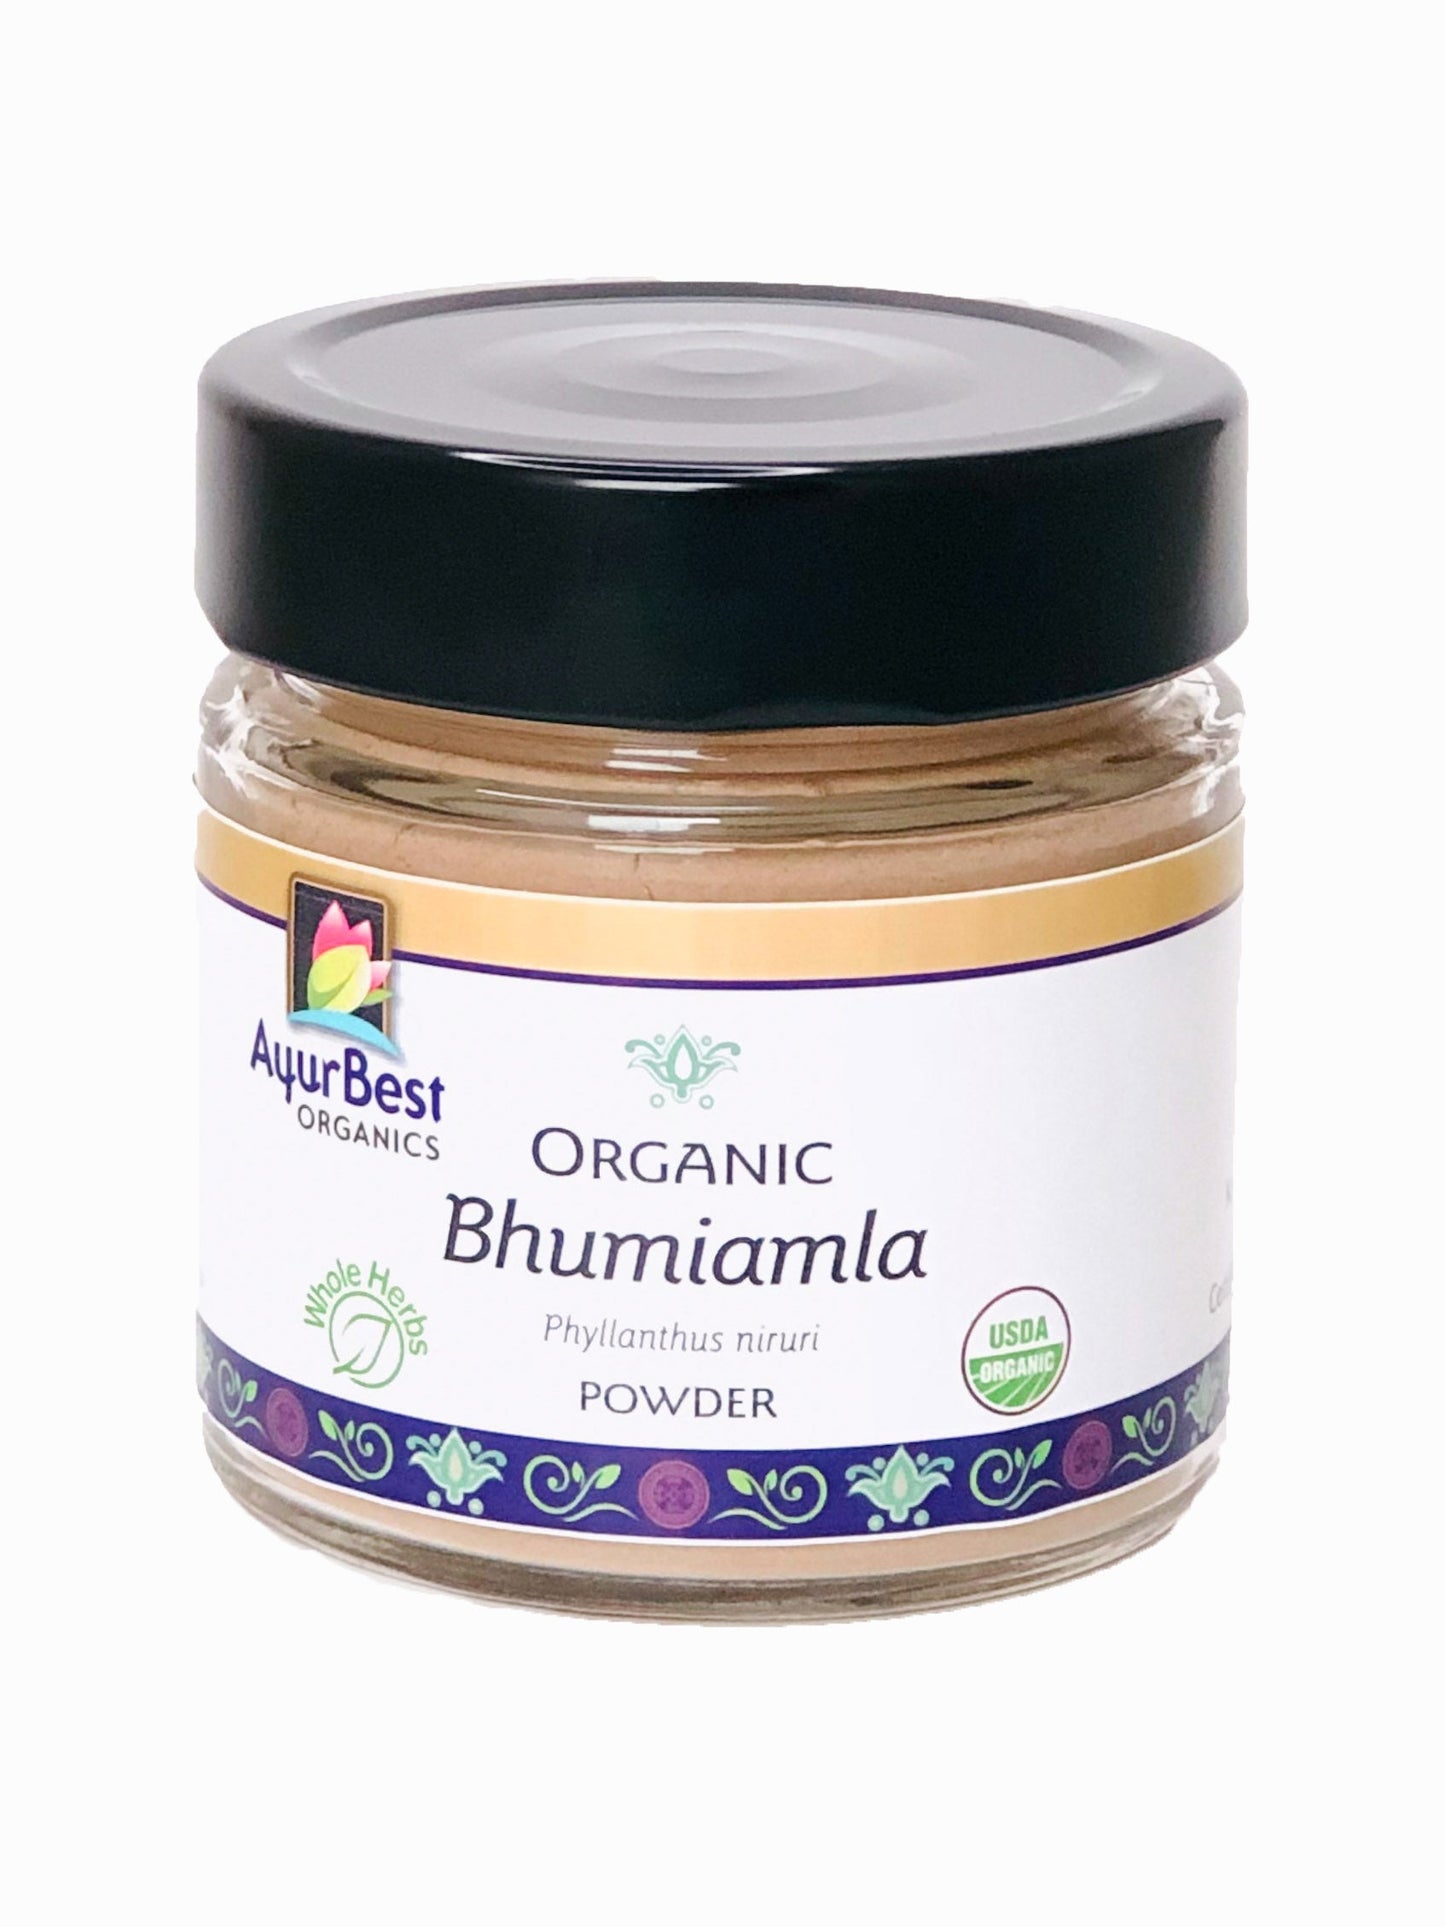 Wholesale Spices & Herbs - Bhumiamla Powder, Organic 2.9oz (82.2g) Jar